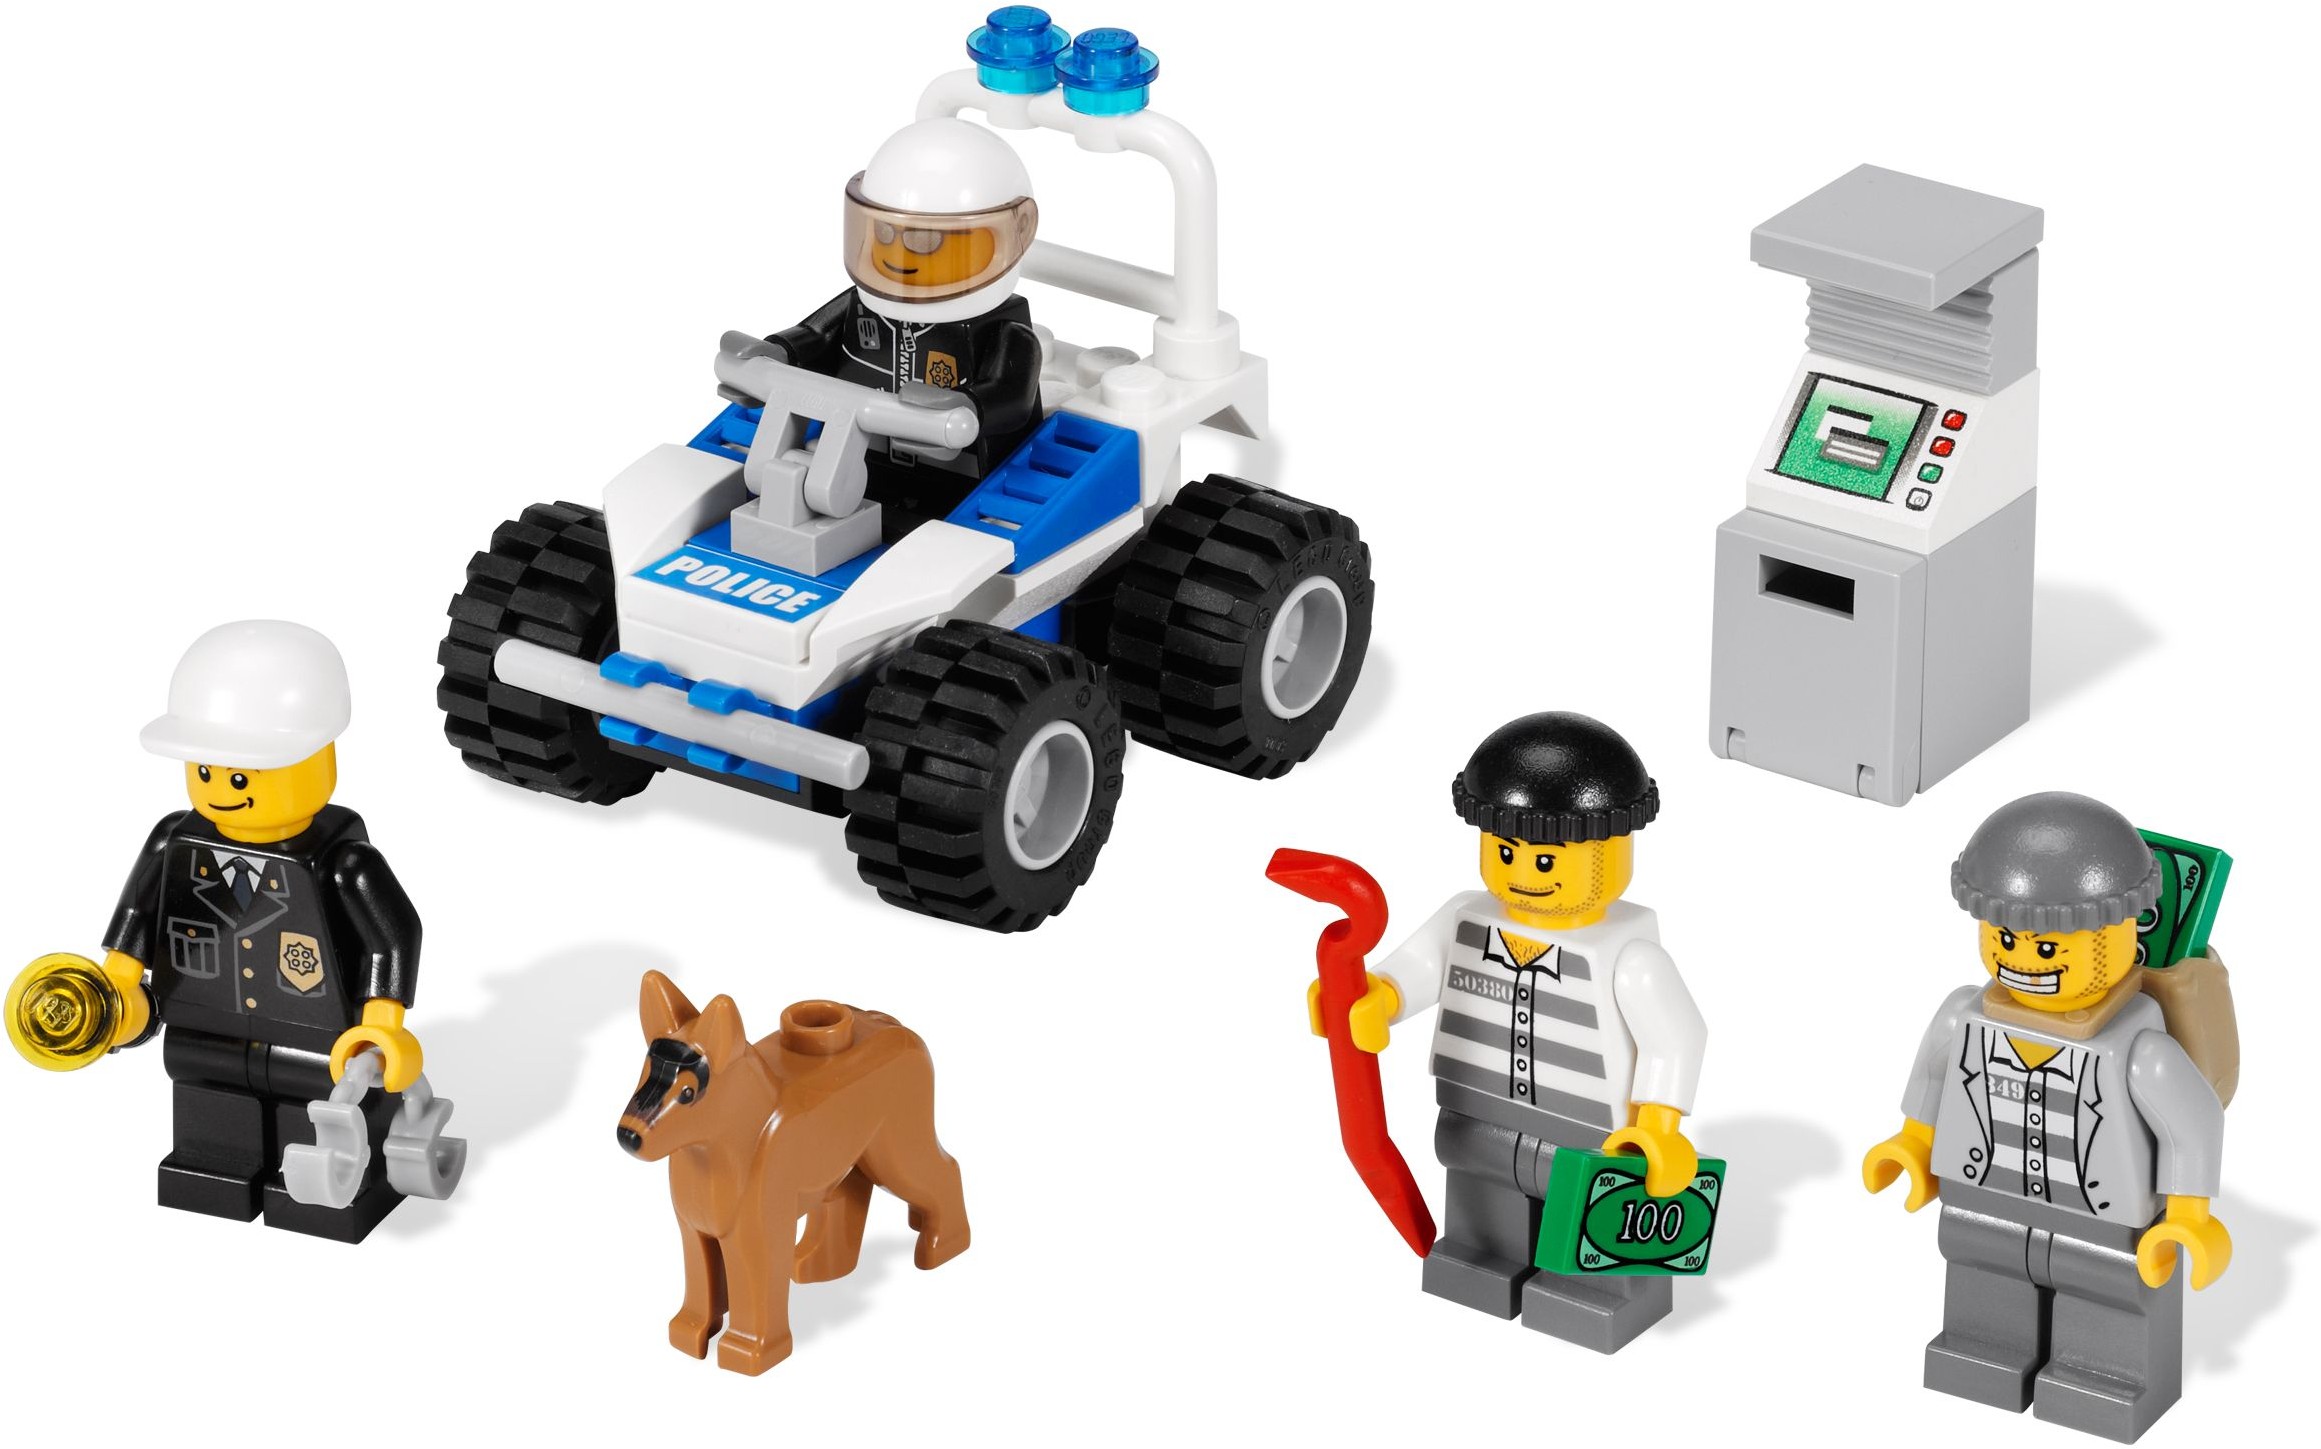 LEGO City Police